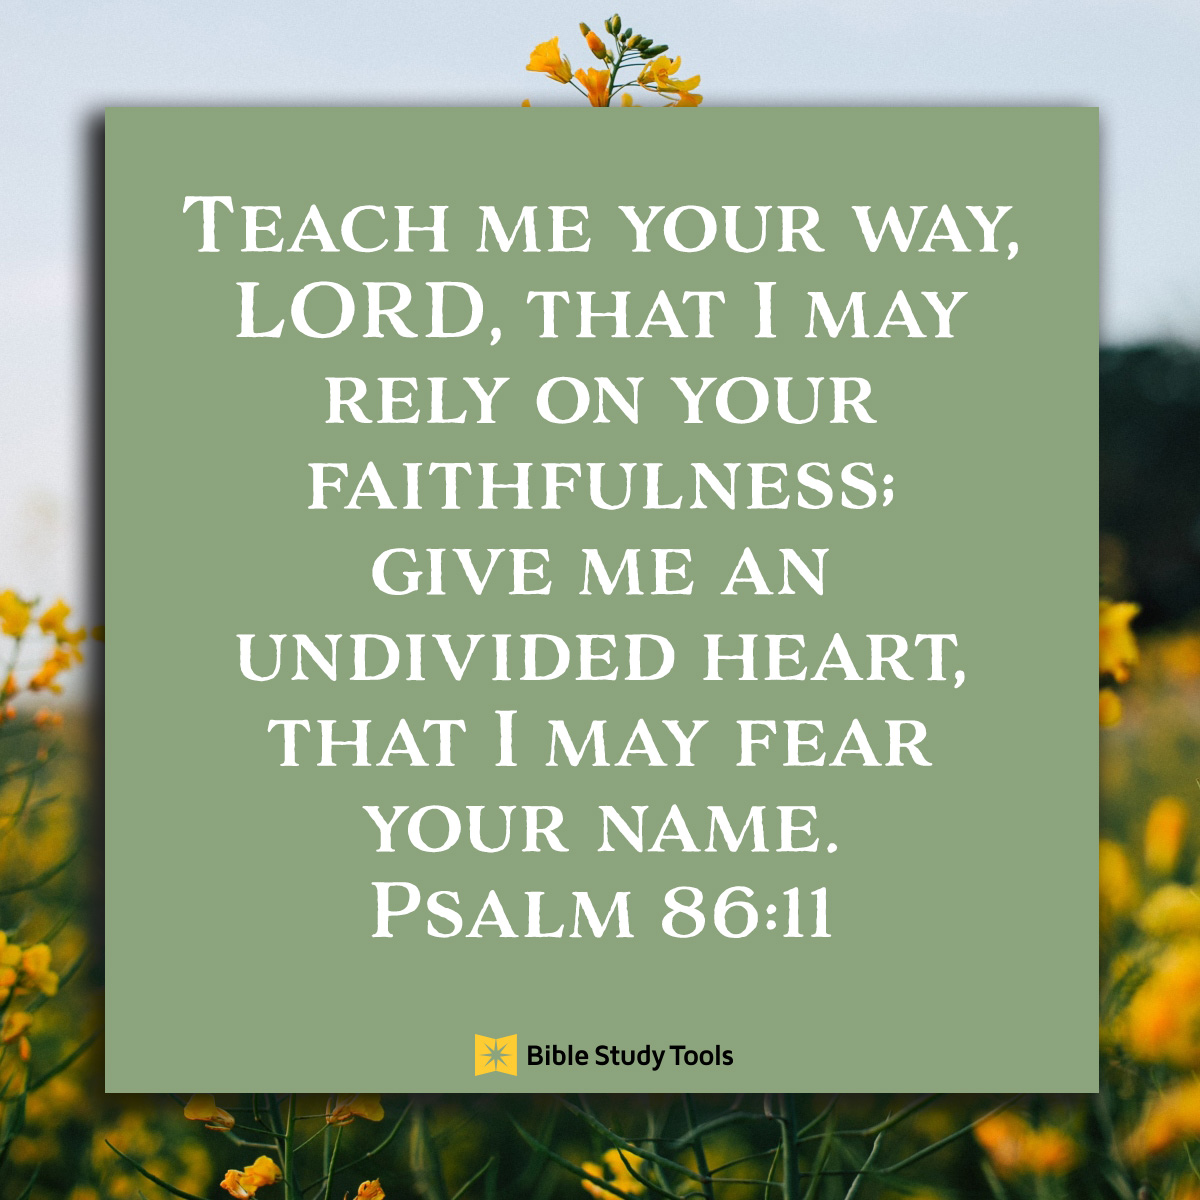 Psalm 86:11, inspirational image